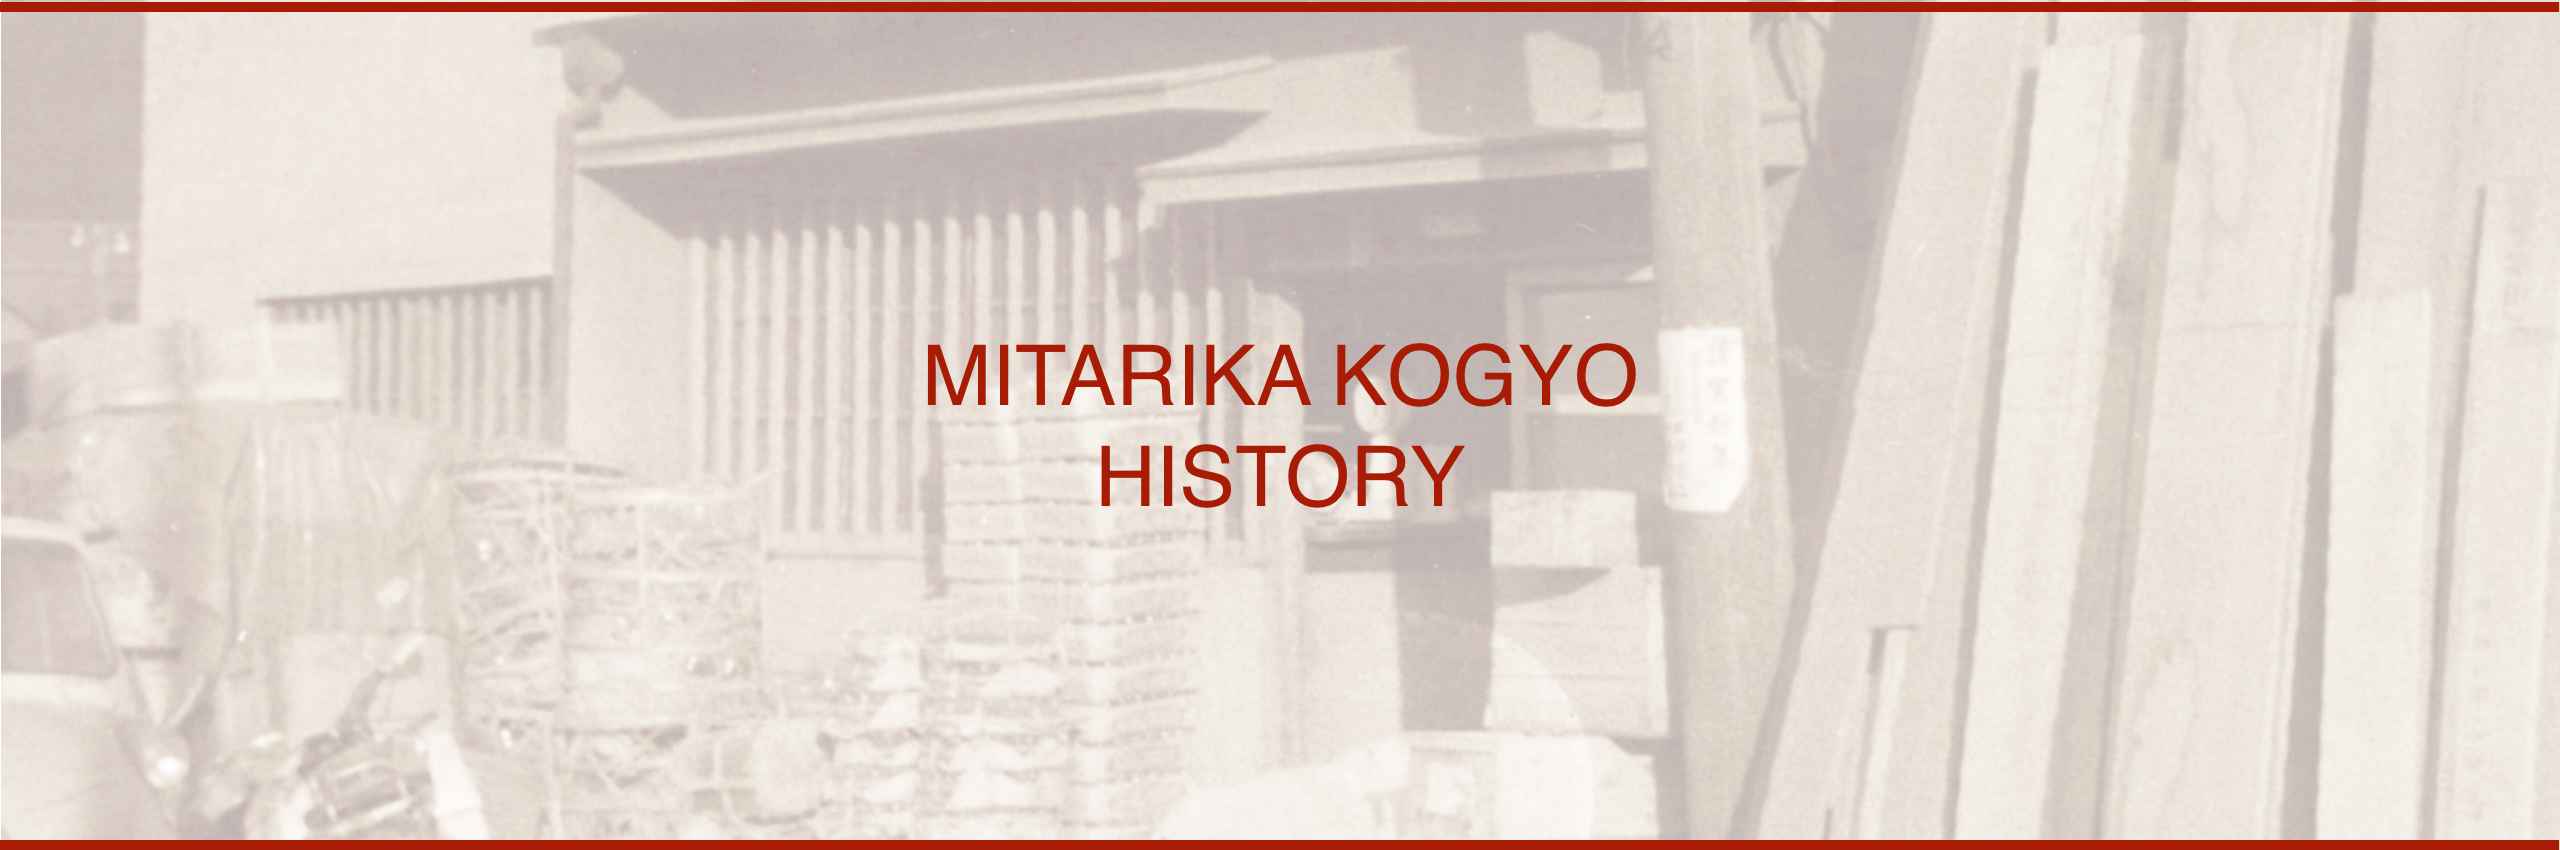 MITARIKA KOGYO HISTORY